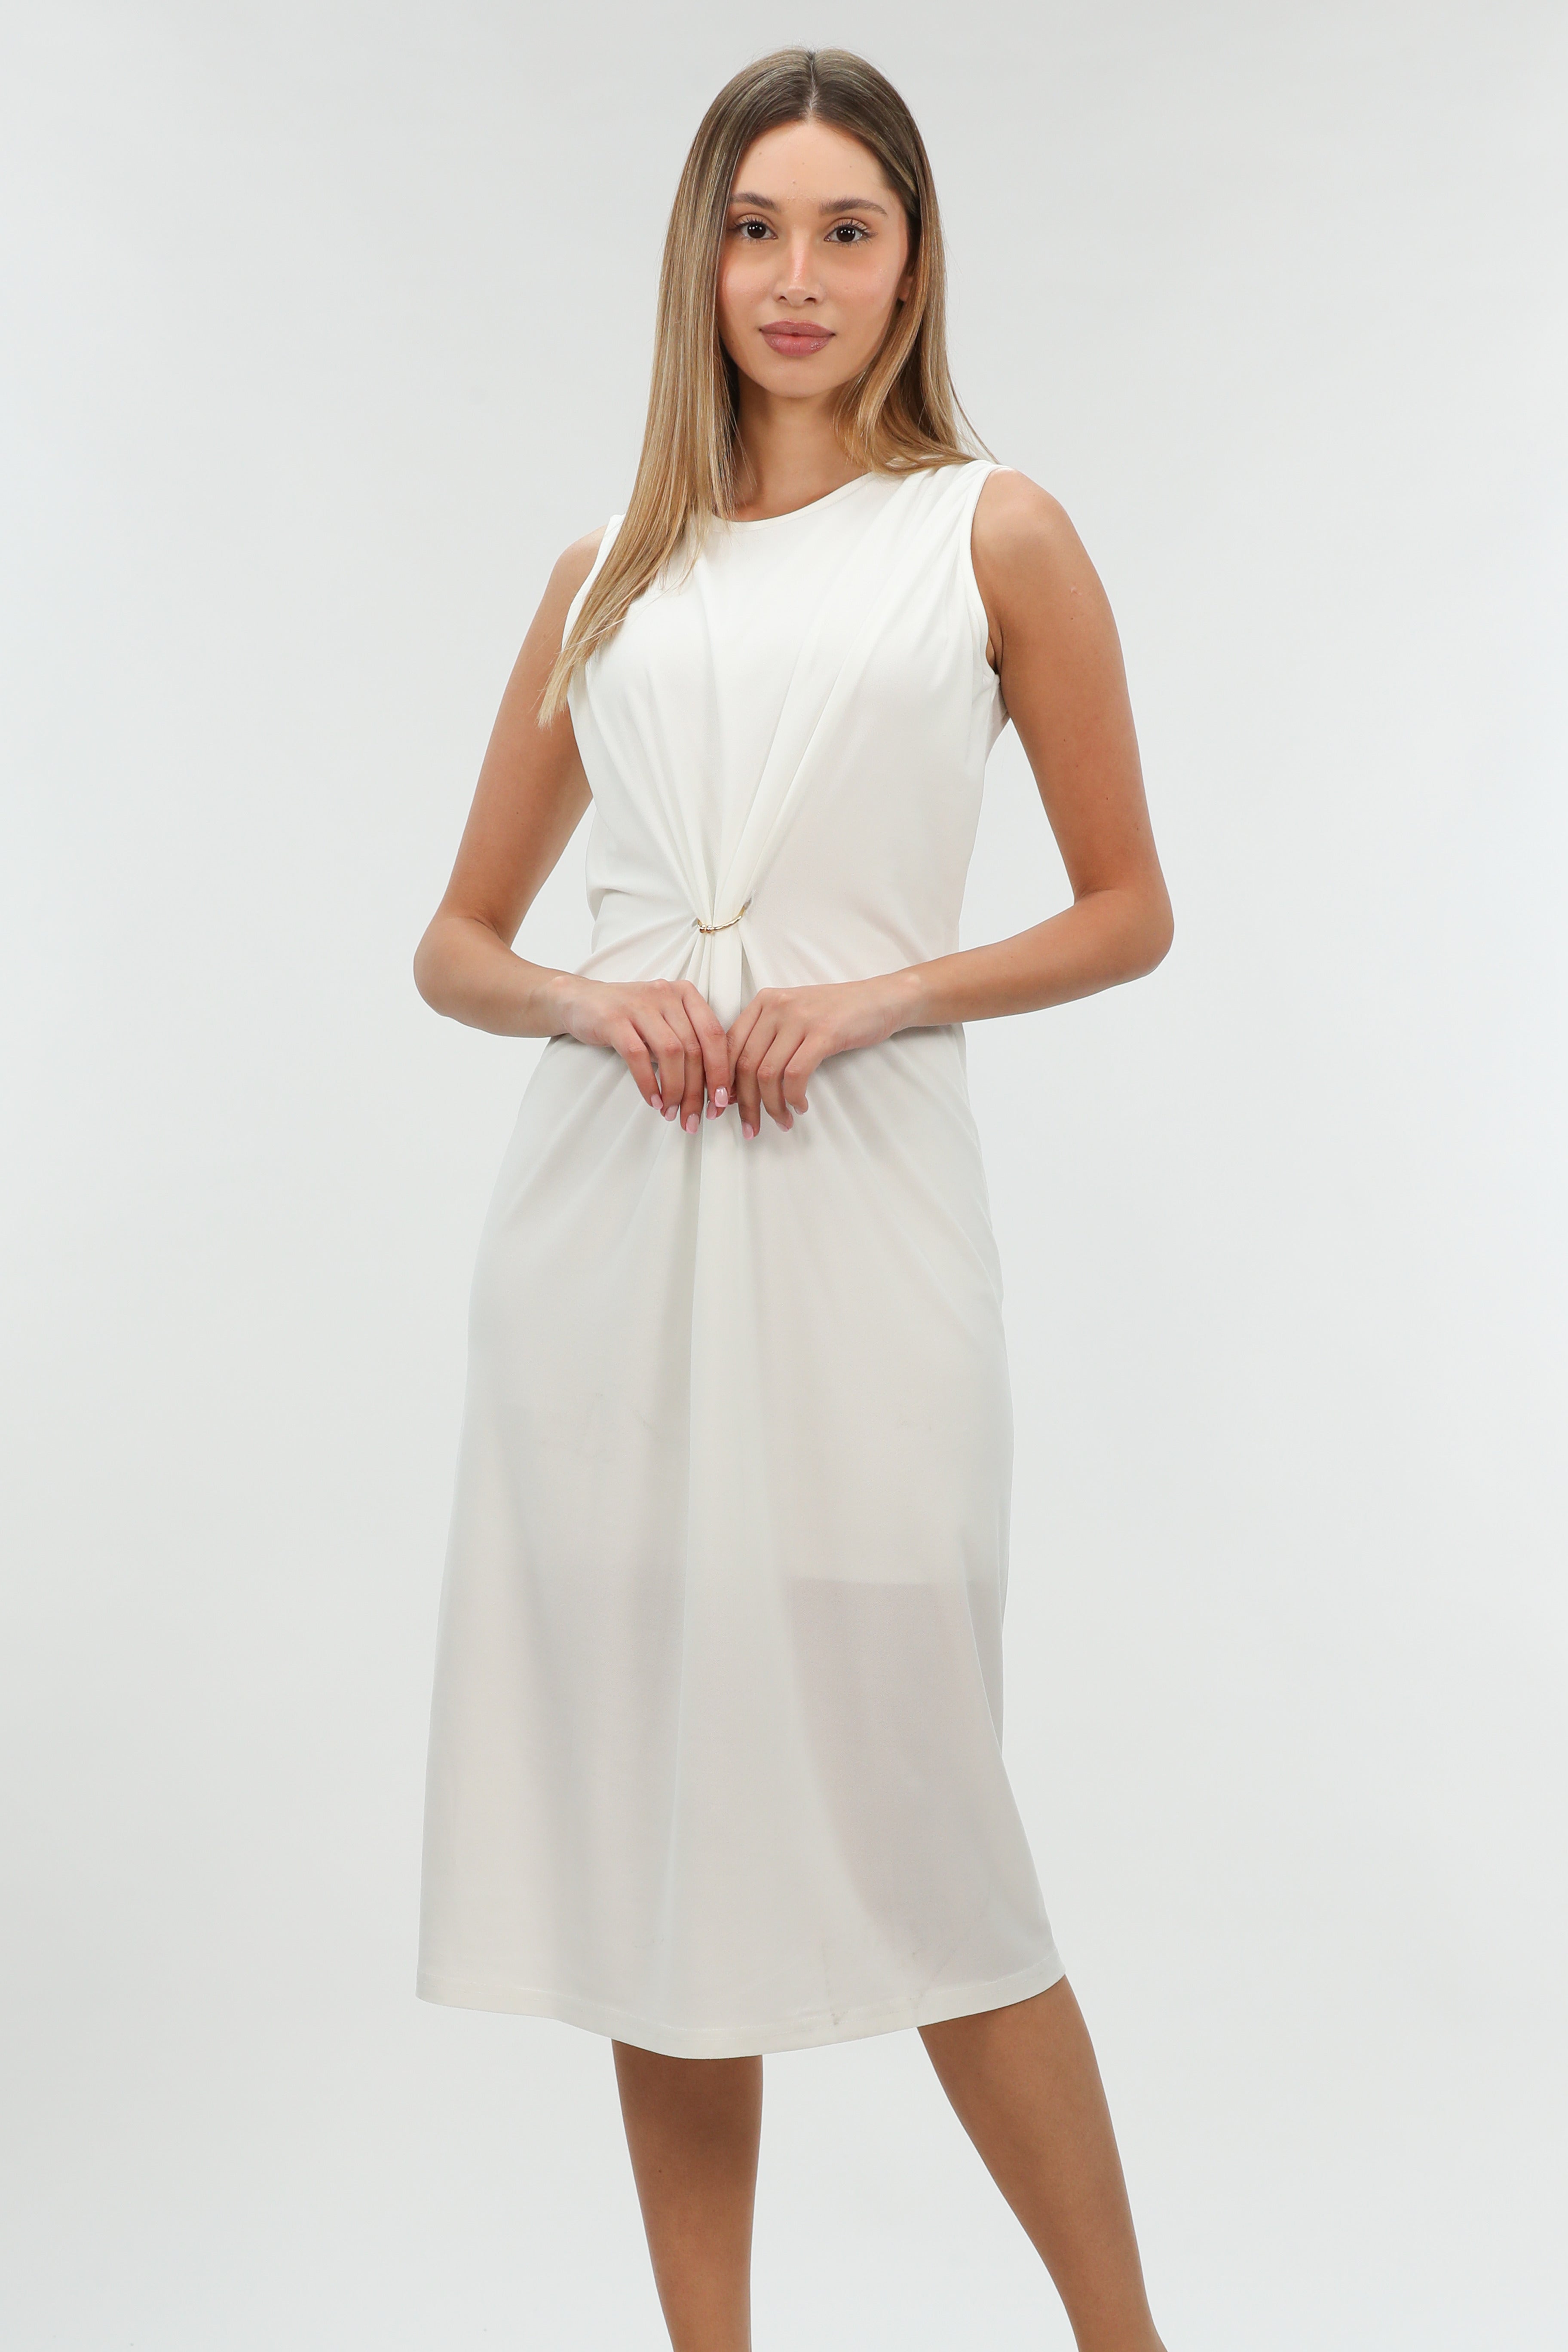 Classy White Simple Dress